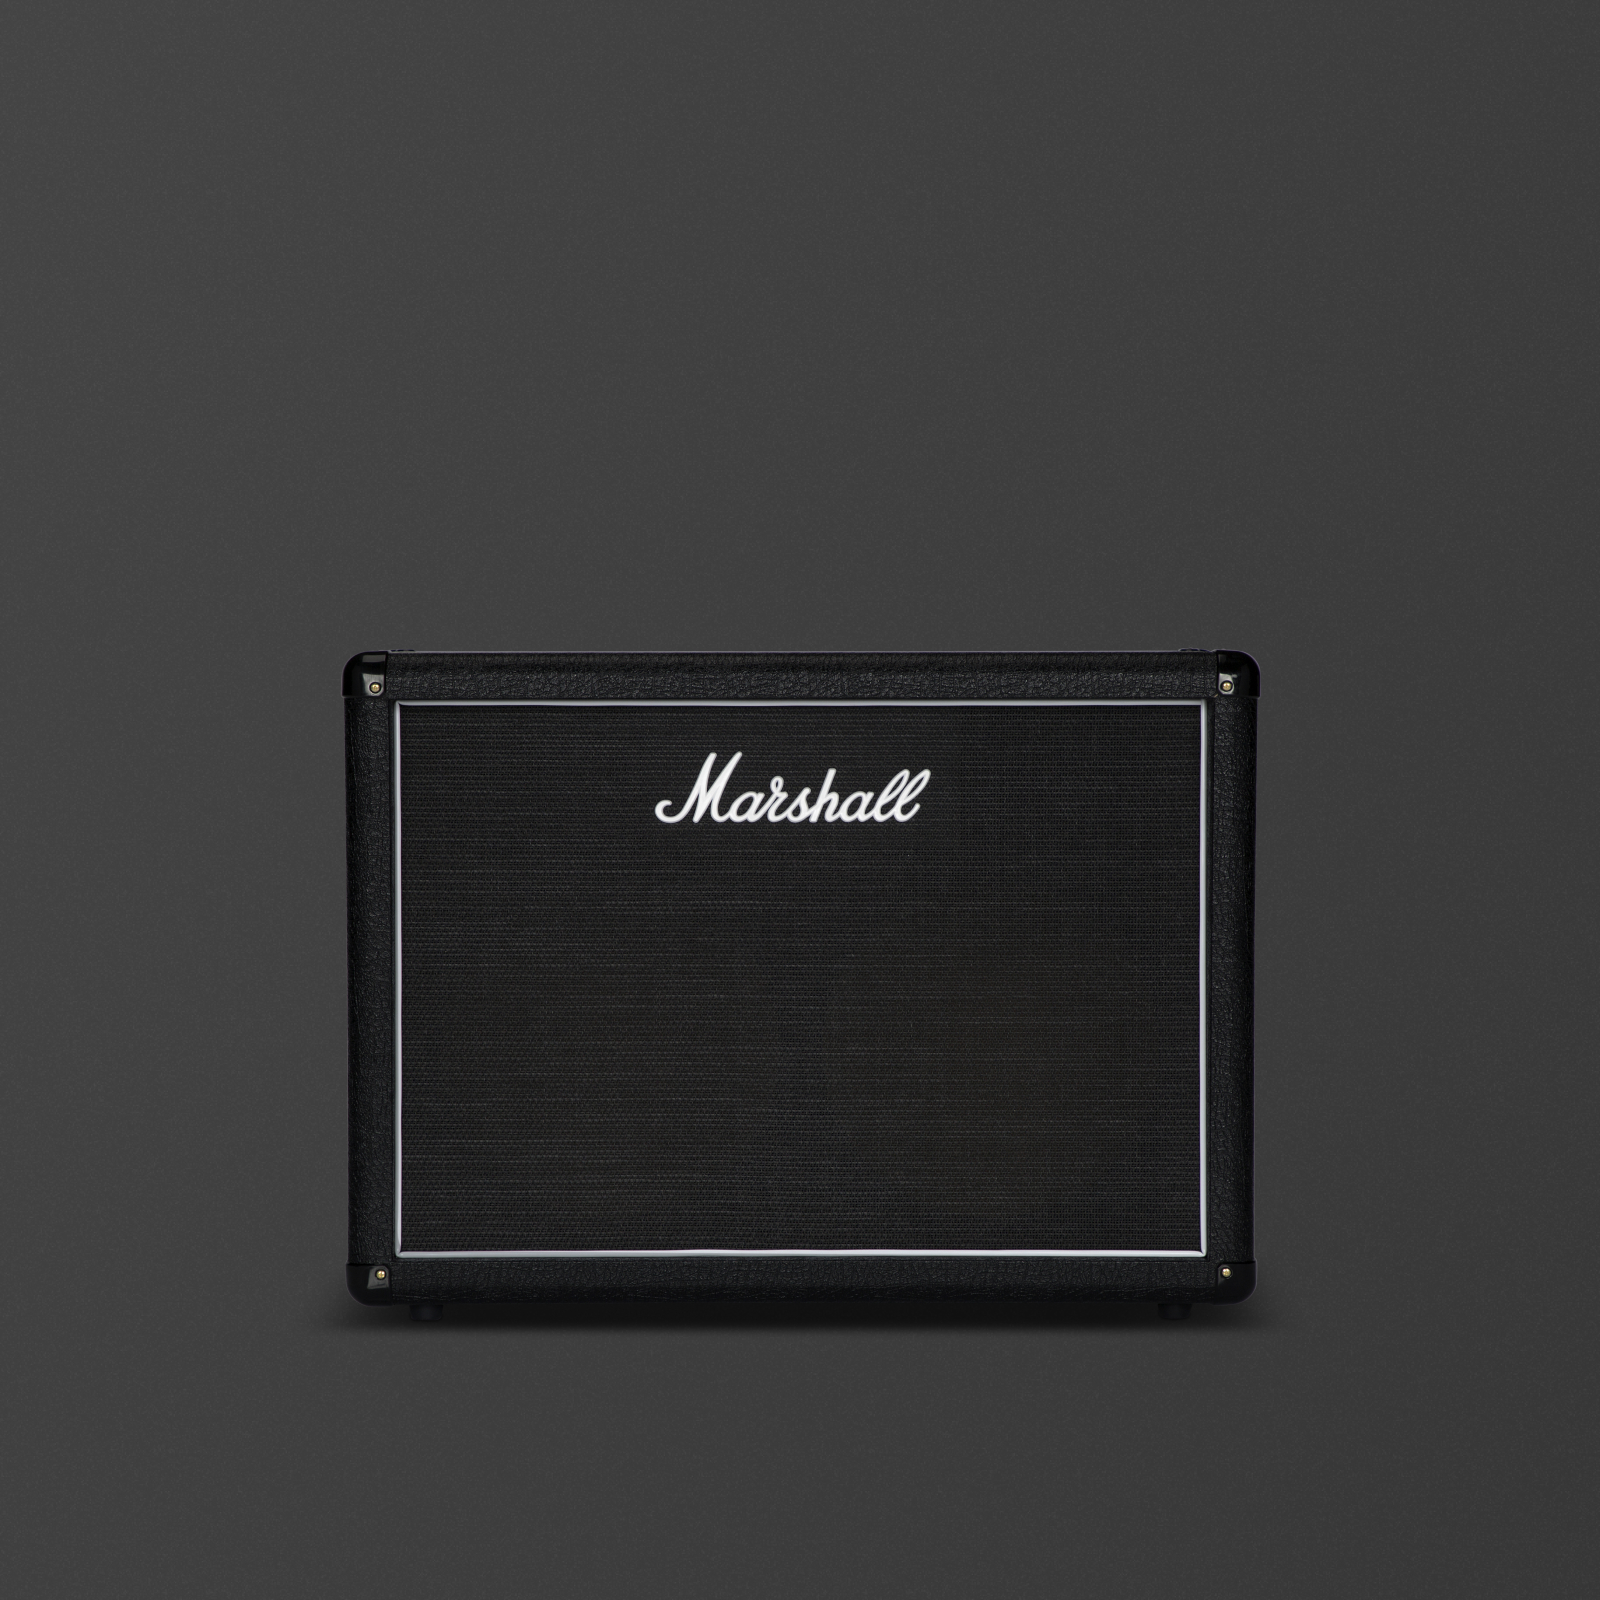 Marshall's MX212 black cabinet. 